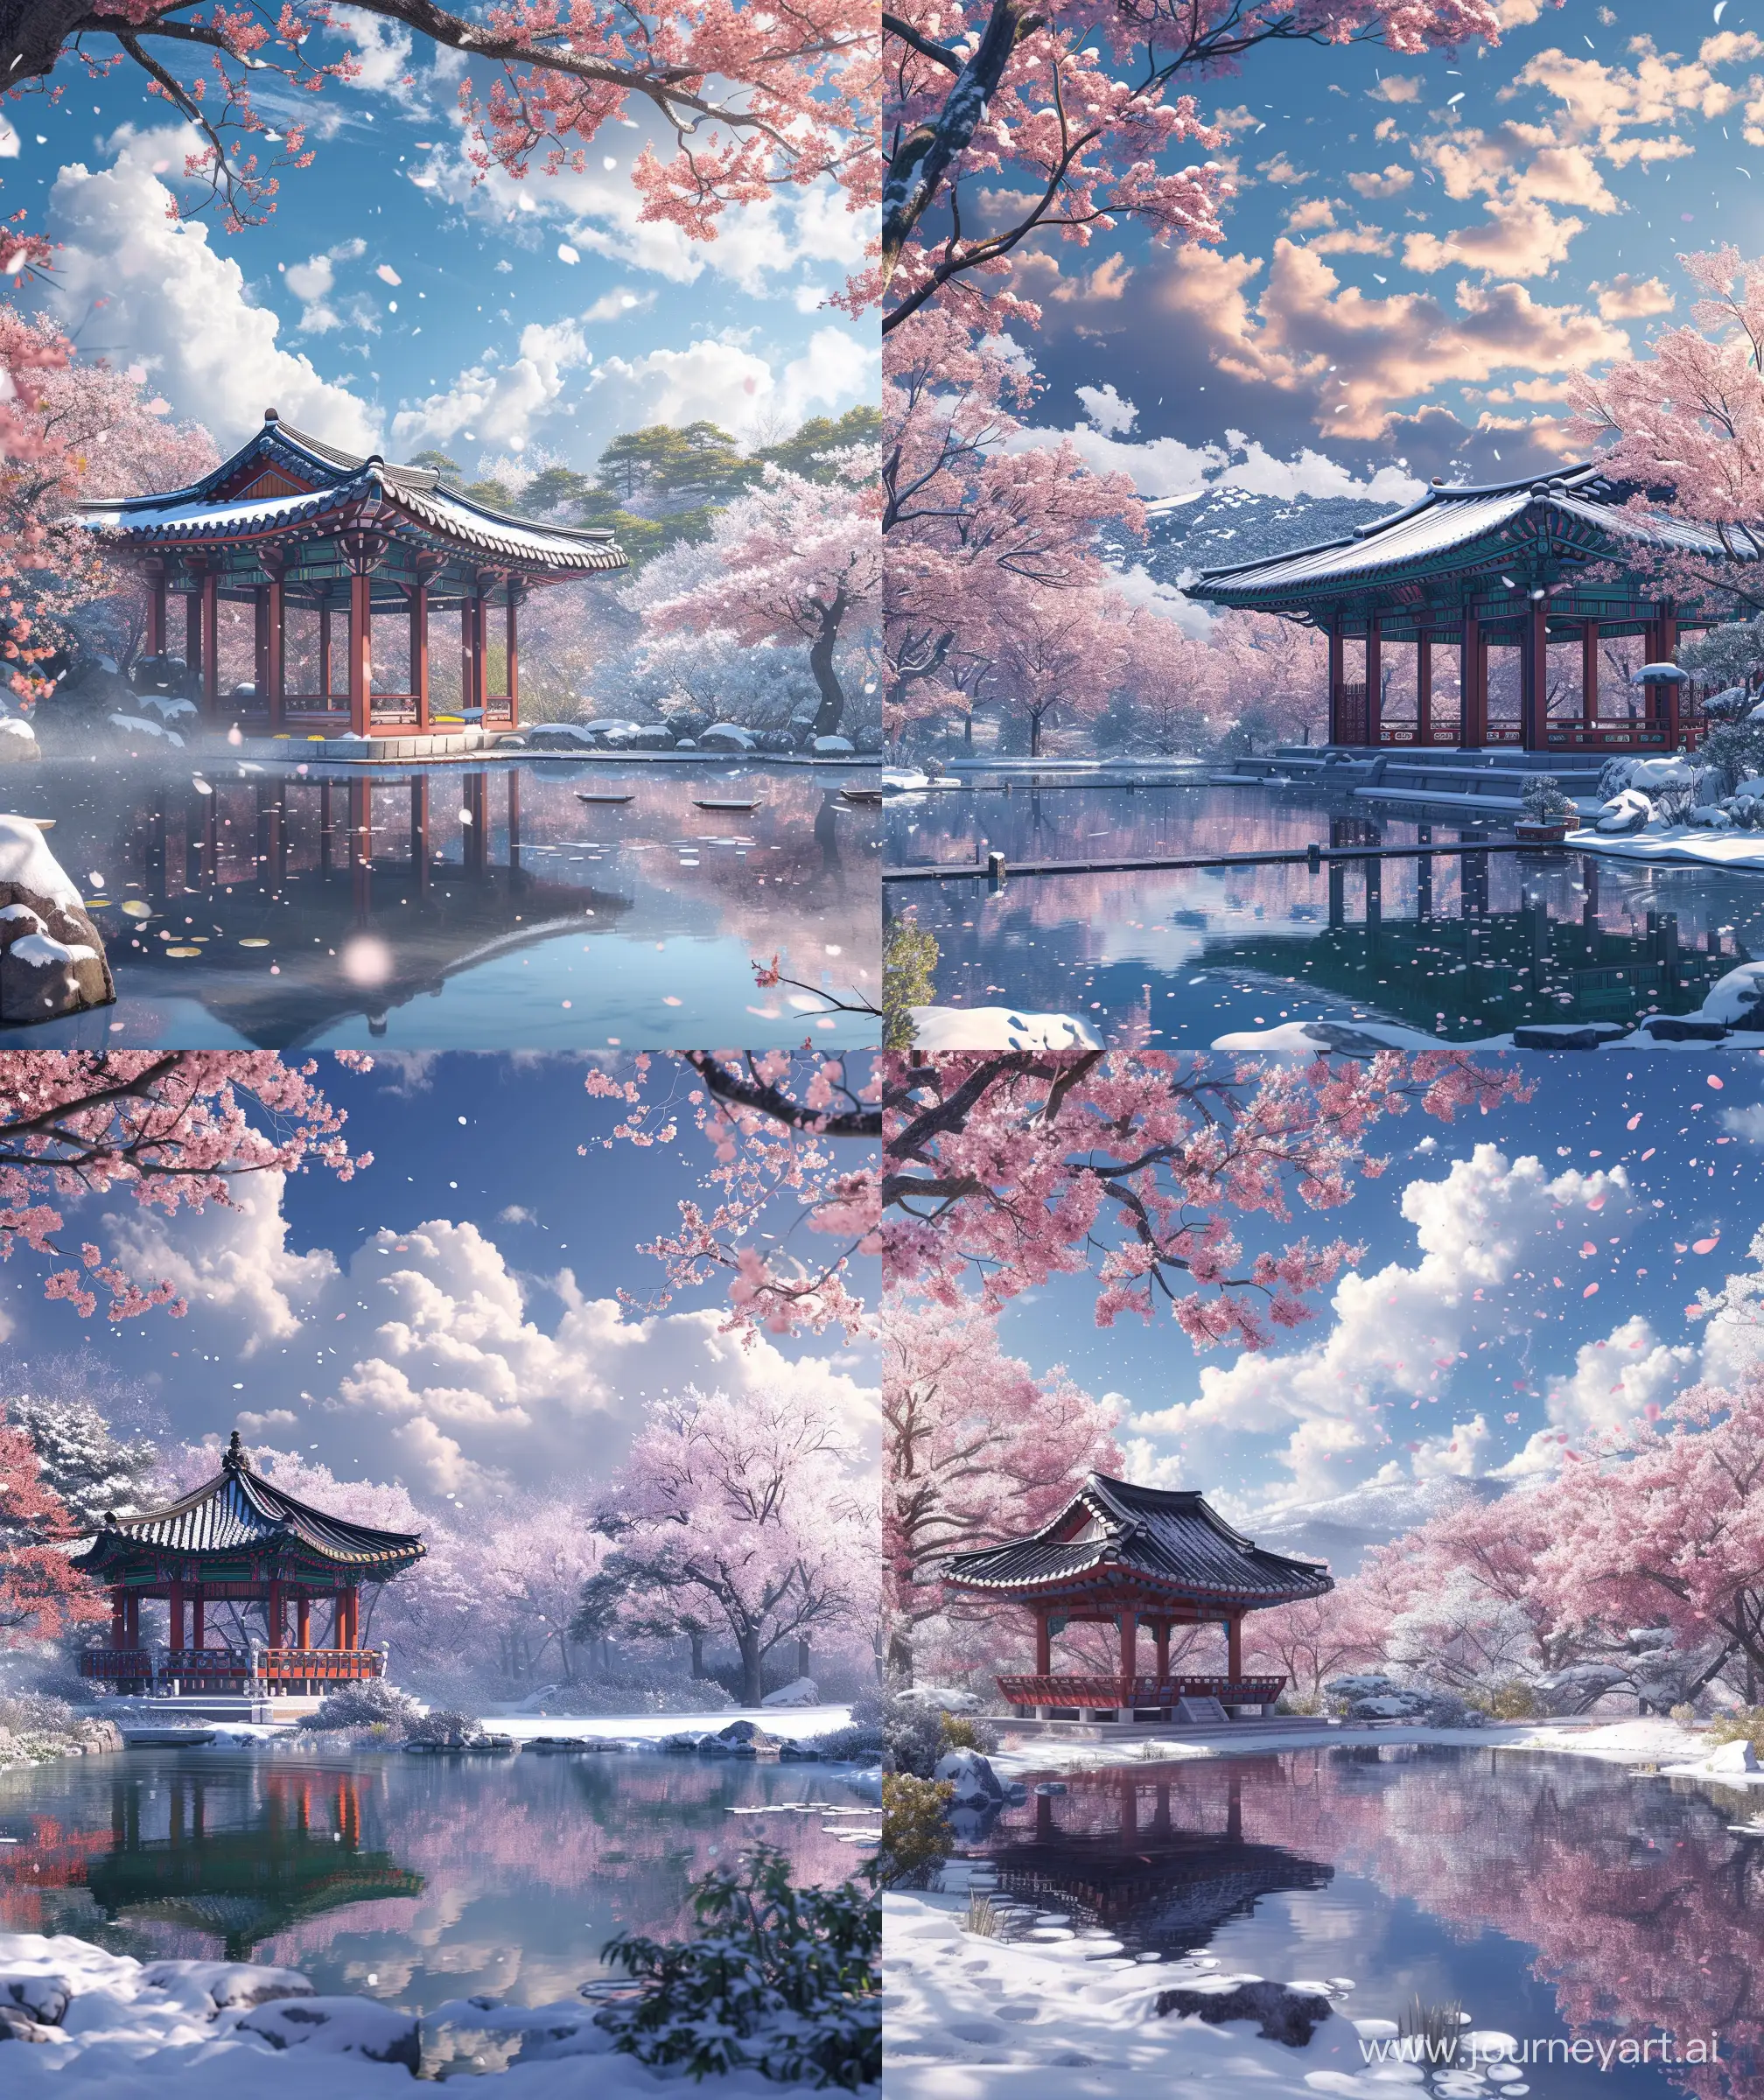 Winter-to-Spring-Transition-Korean-Royal-Pavilion-in-Makoto-Shinkai-Anime-Style